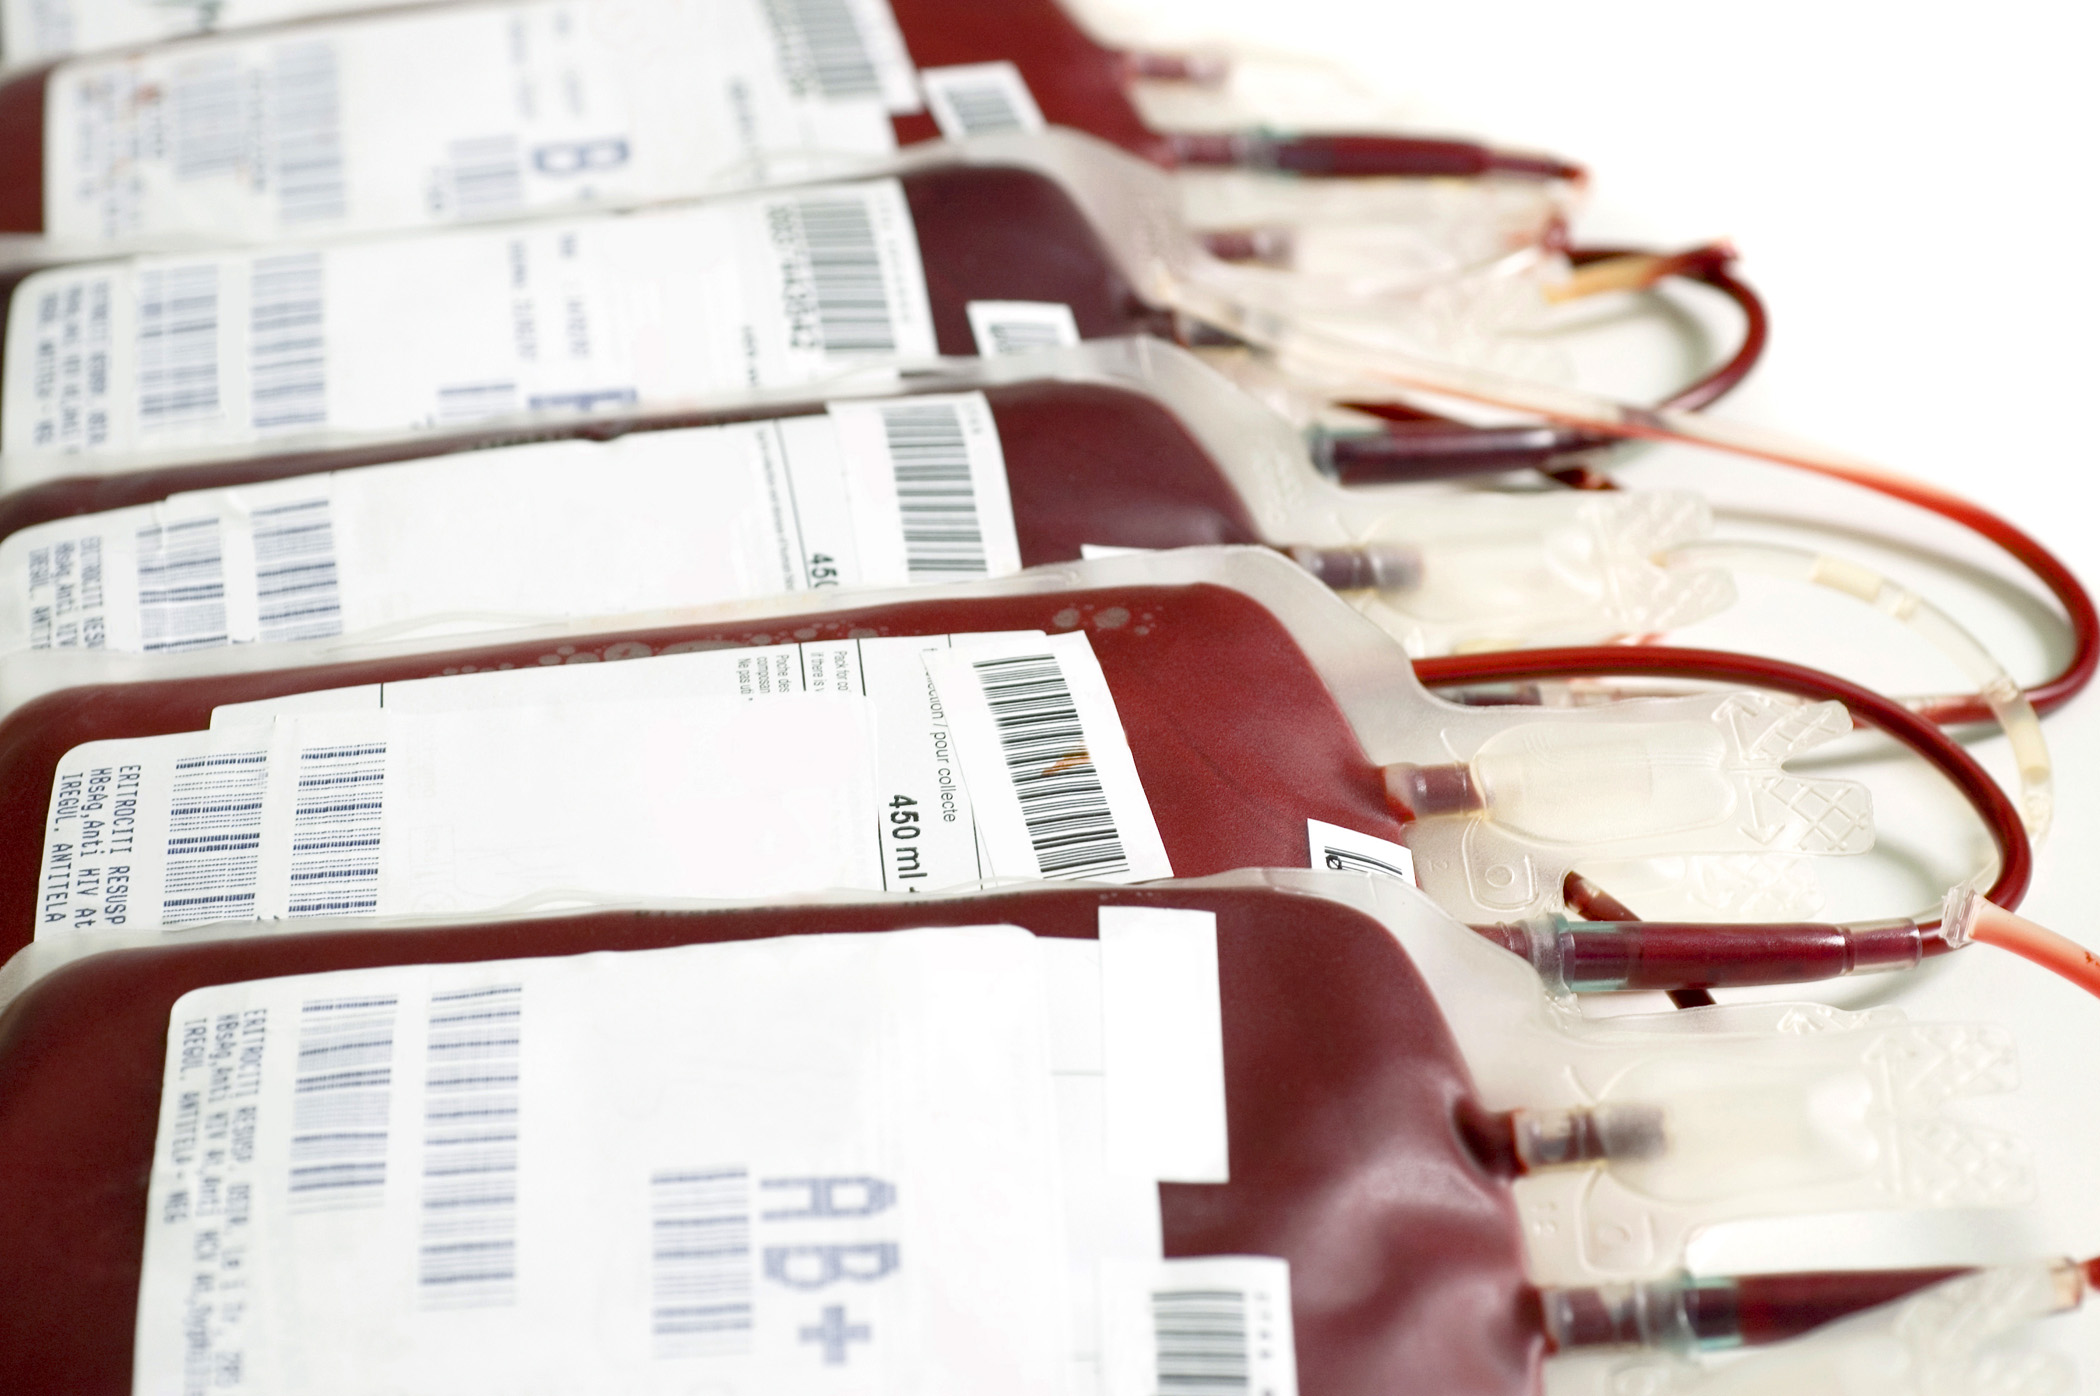 Tamil Nadu: Blood Banks to now use Biometrics